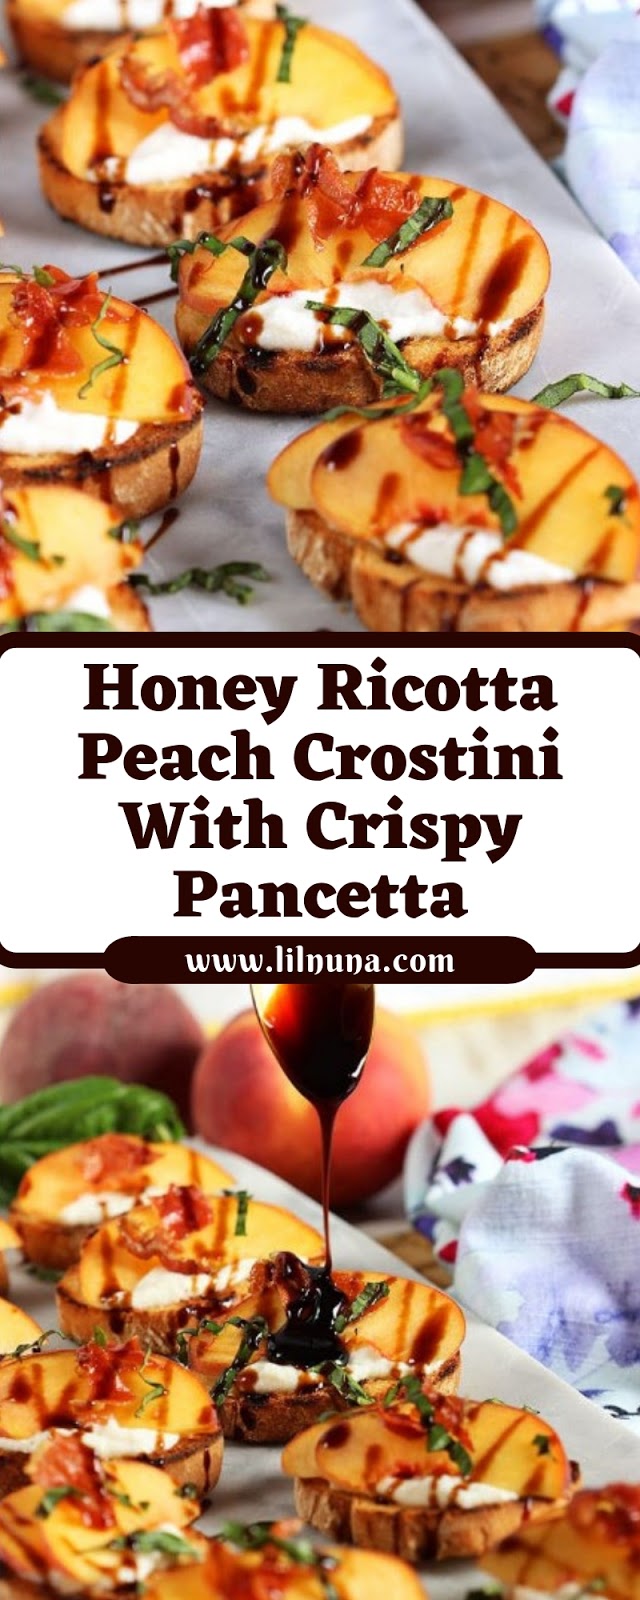 Honey Ricotta Peach Crostini With Crispy Pancetta